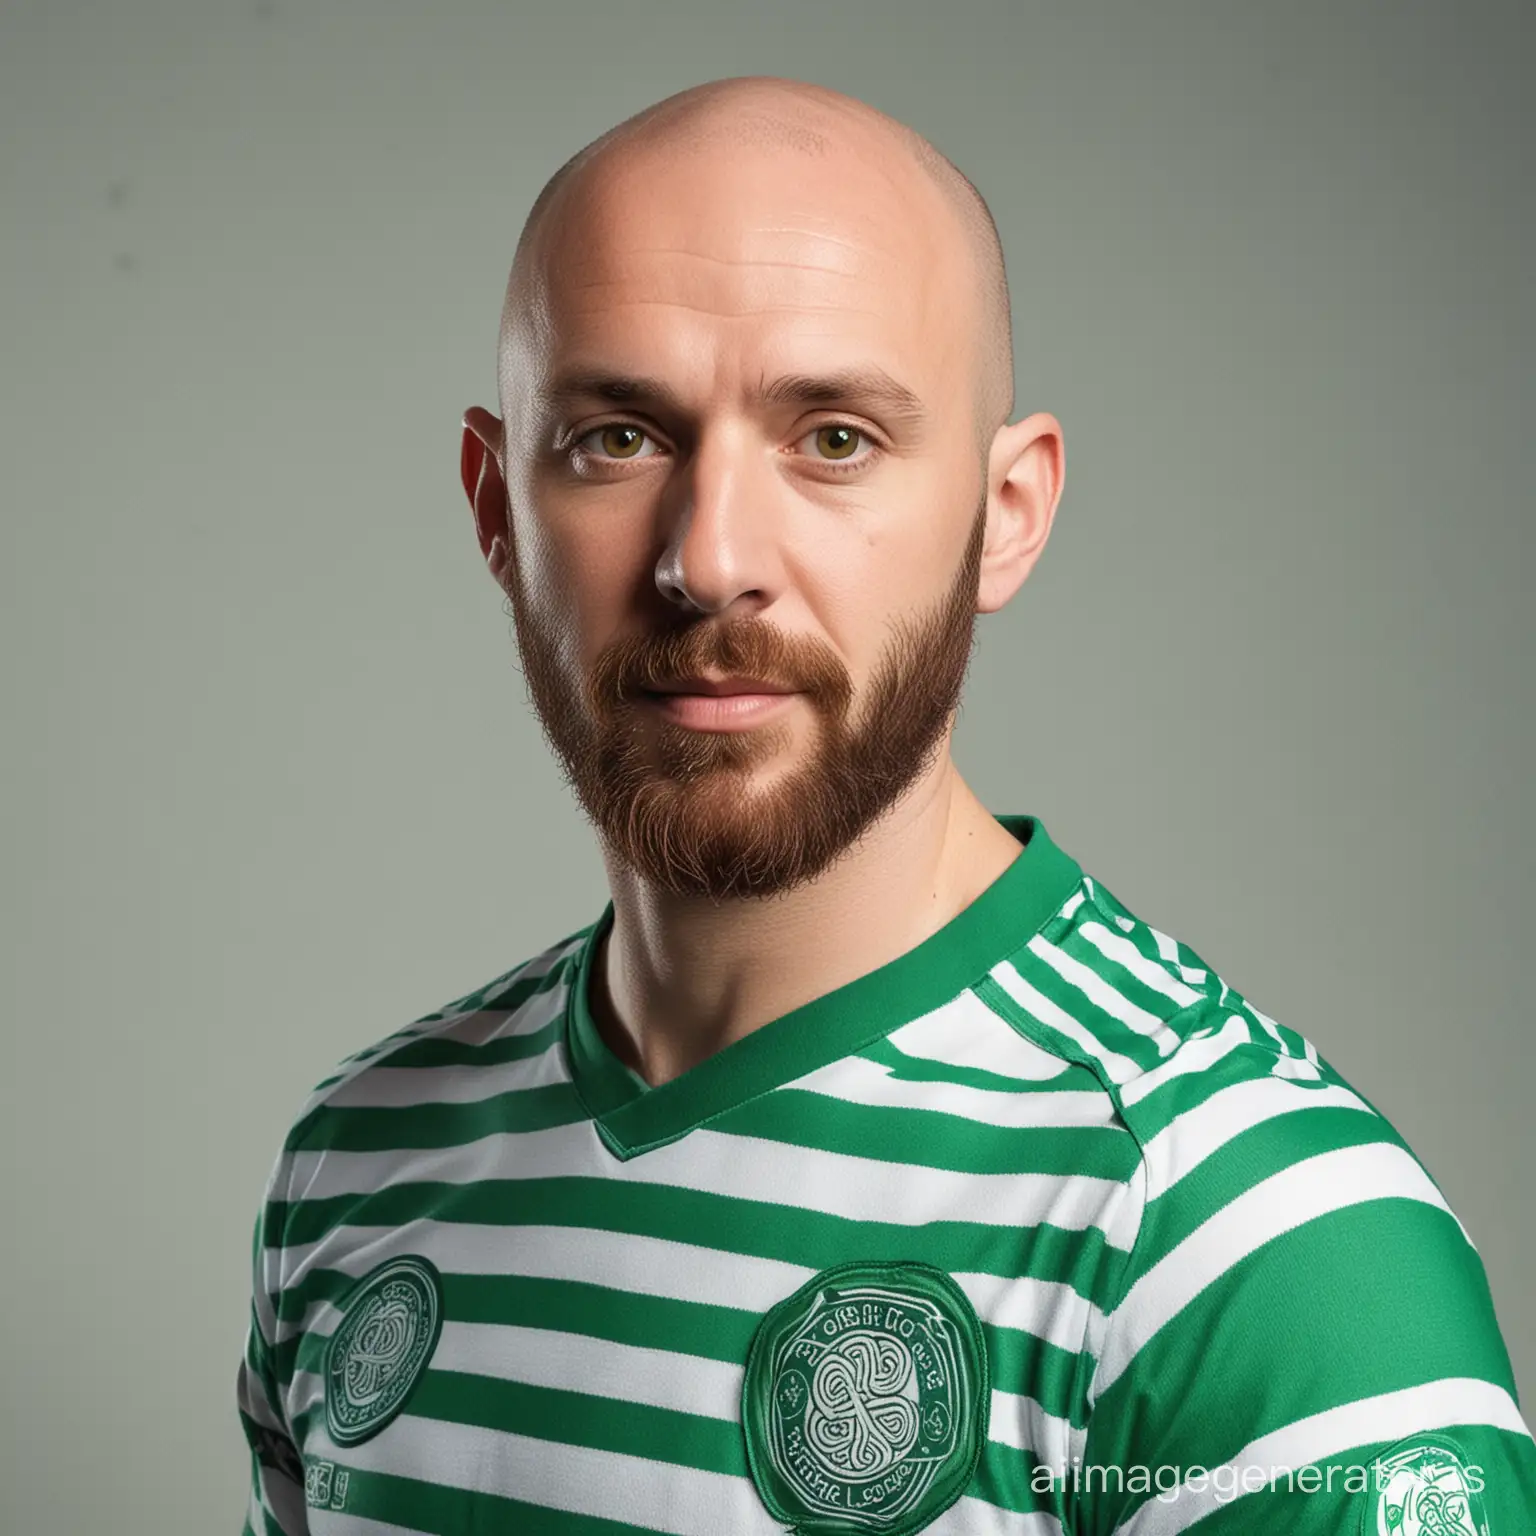 Bald-Man-in-Celtic-Football-Jersey-with-Short-Beard